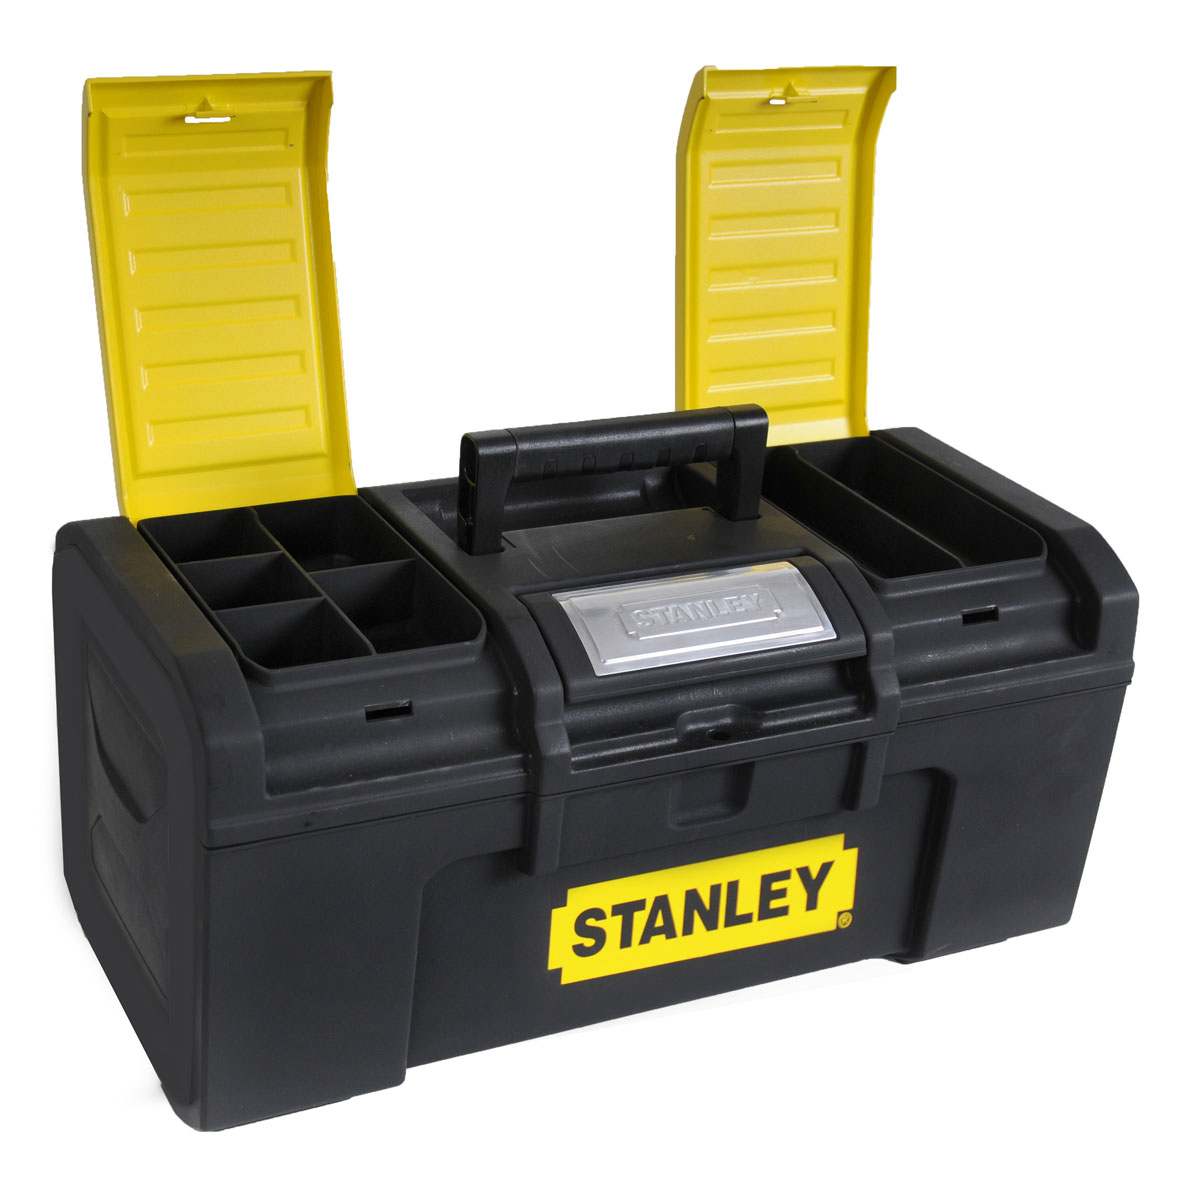 Toolbox 1. Ящик для инструментов Stanley BASICTOOLBOX 19" (1-79-217). Stanley ящик для инструмента Stanley Basic Toolbox 16 1-79-216. Ящик для инструментов Stanley 19 toolboks. Ящик для инструментов Stanley 19" Tool boks.